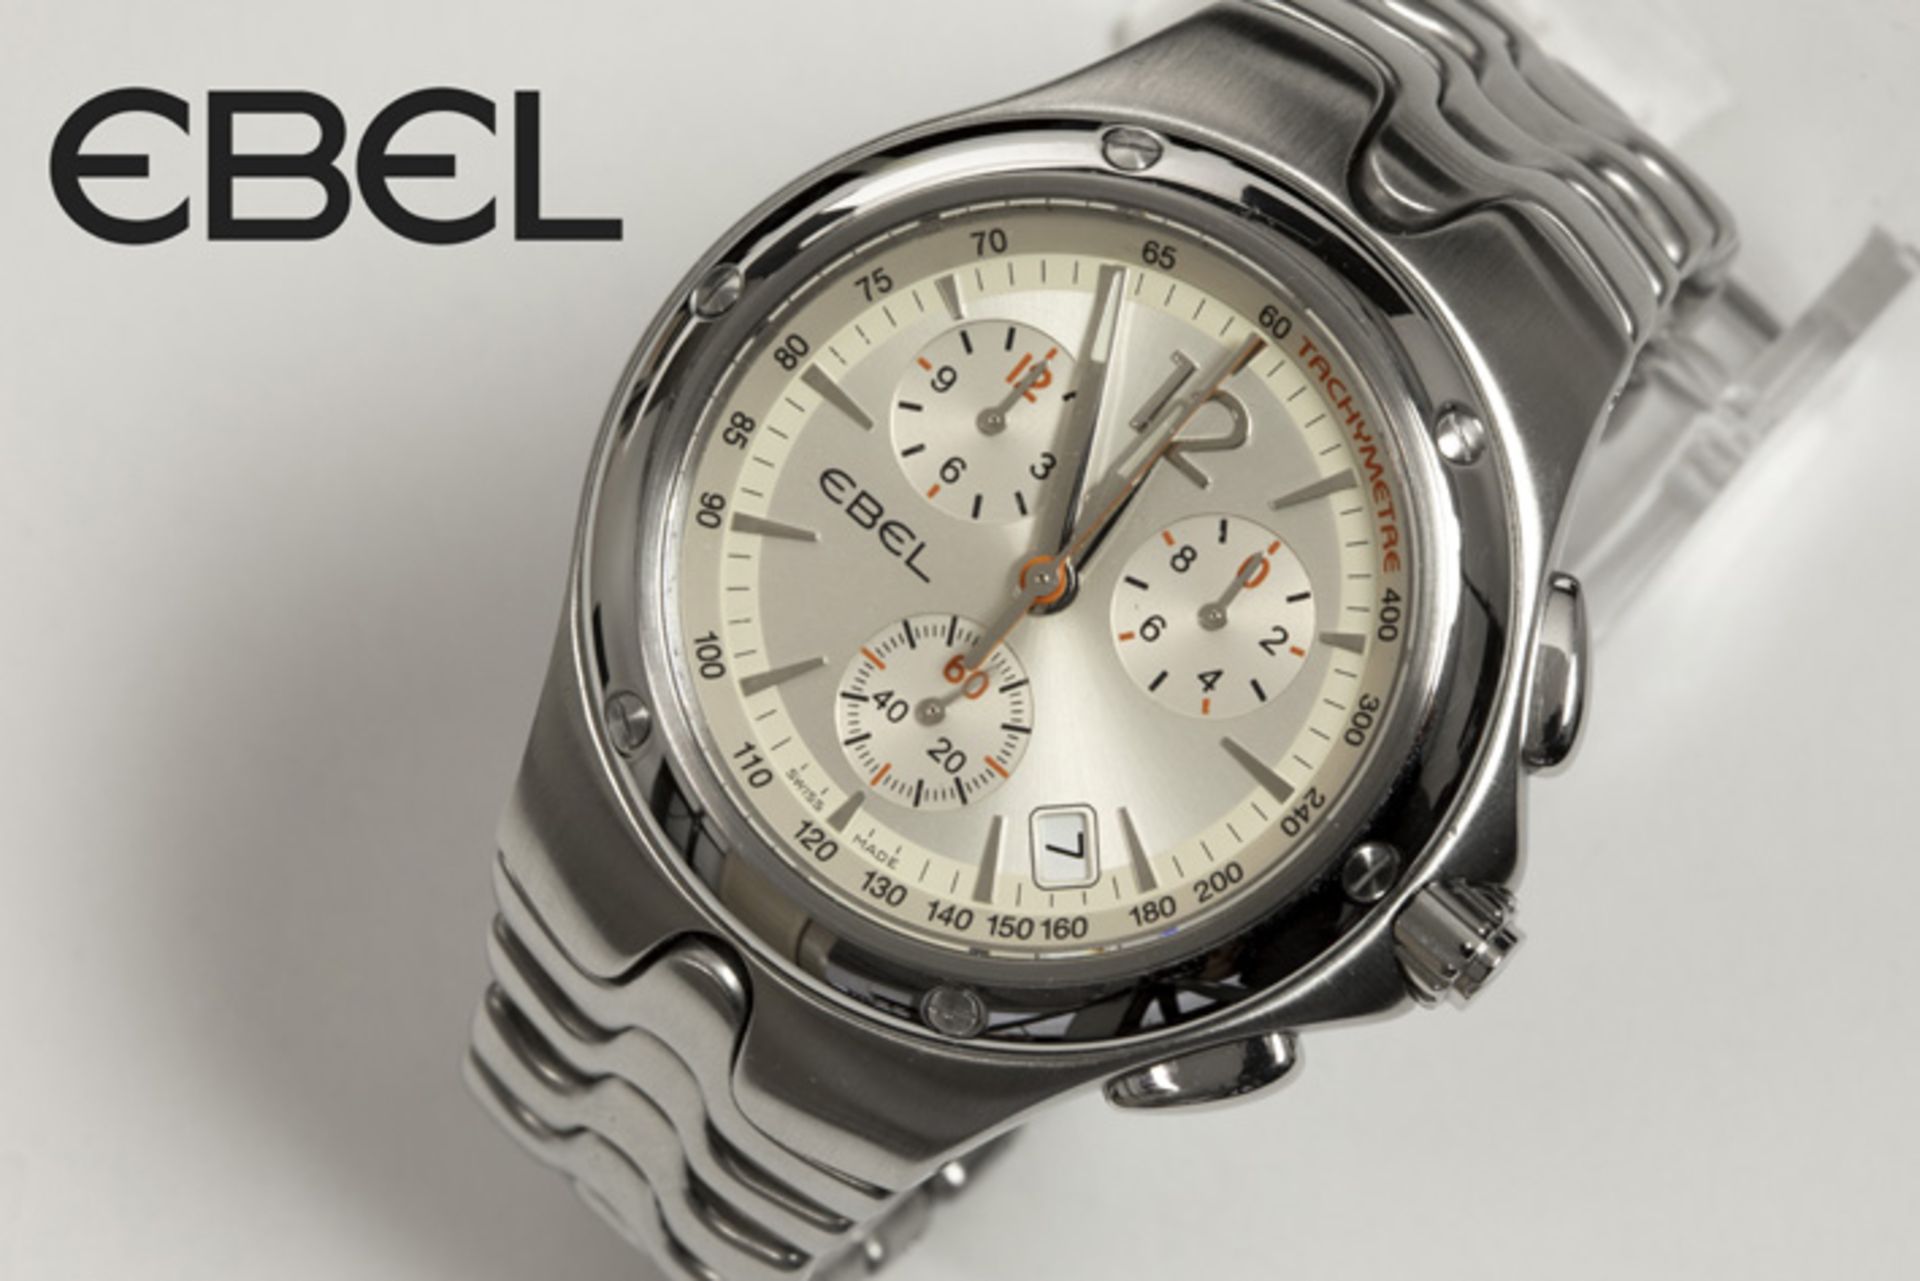 EBEL volledig origineel quartz chronograaf polshorloge - model "Sportwave" - in staal [...]